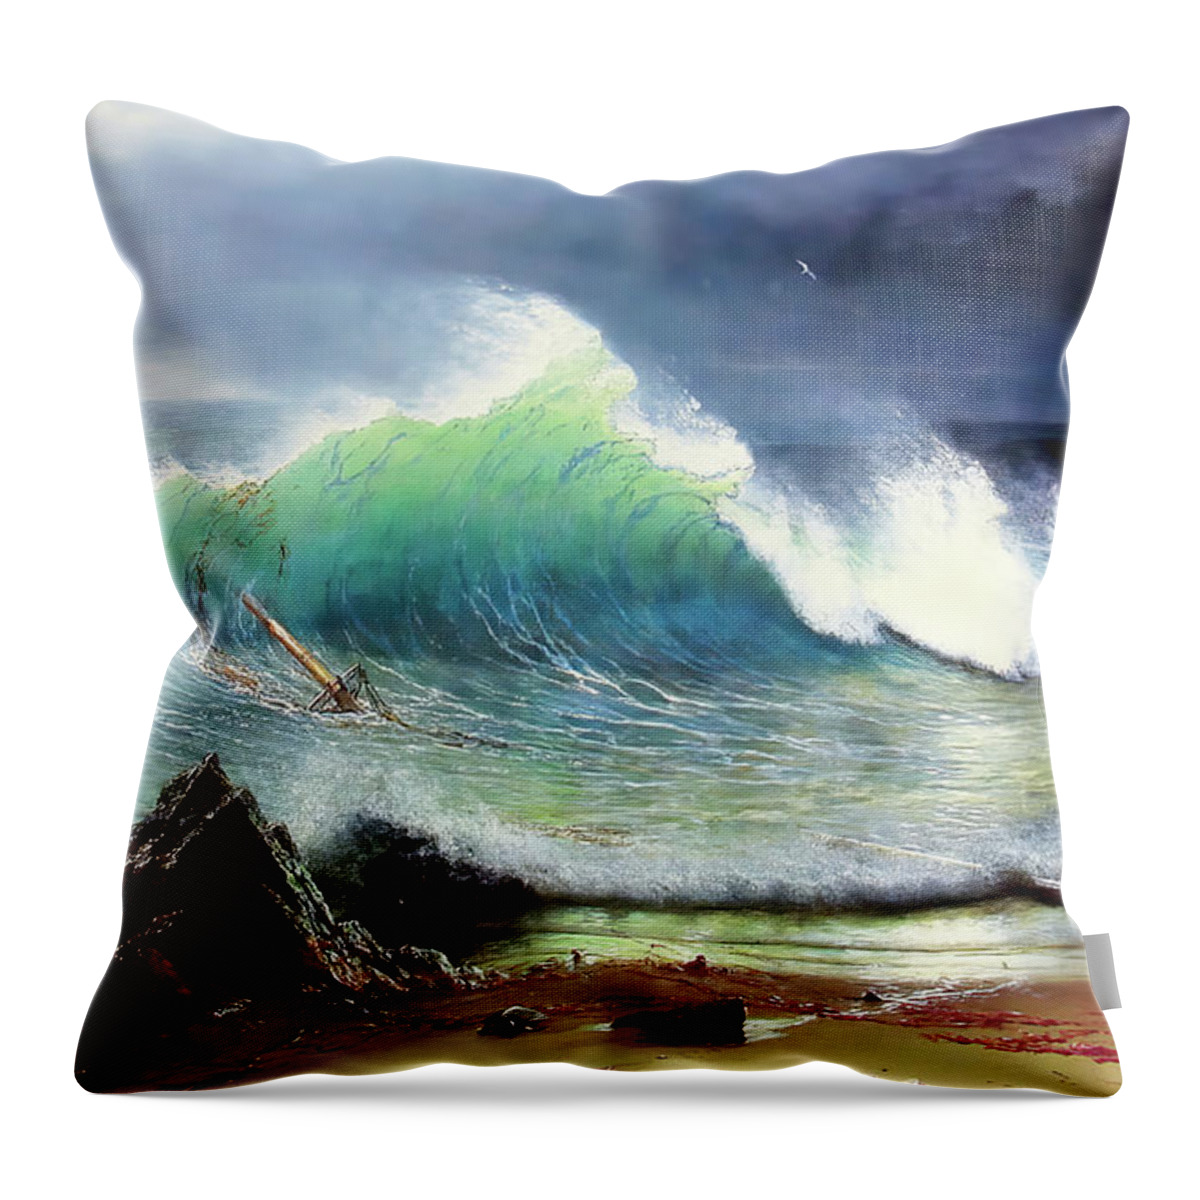 Albert Bierstadt Throw Pillow featuring the photograph The Shore of the Turquoise Sea #1 by Albert Bierstadt